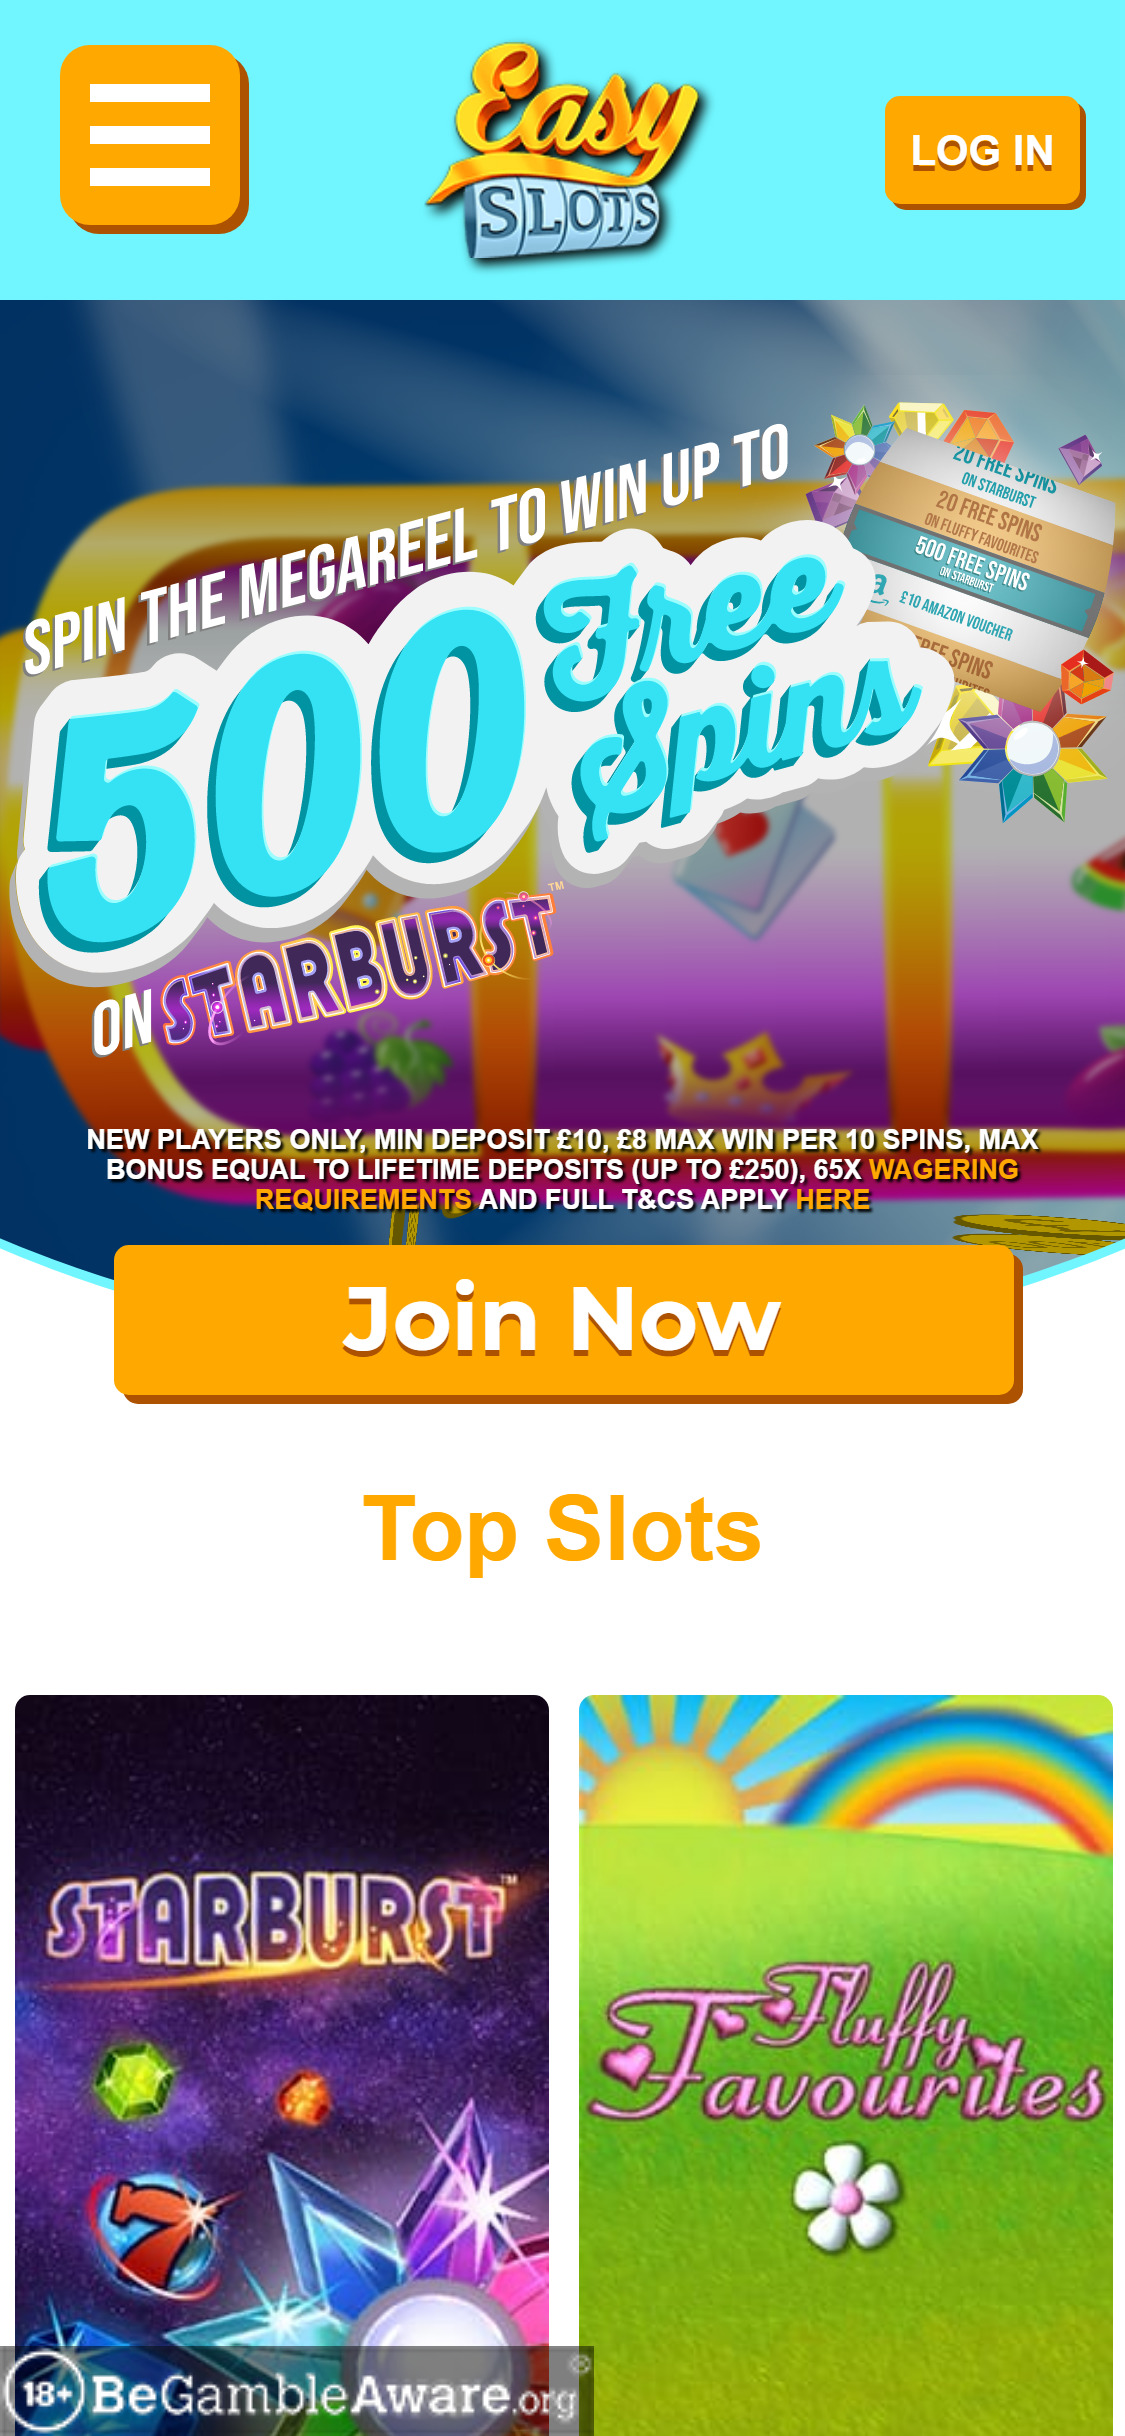 Easy Slots Casino Mobile Login Review